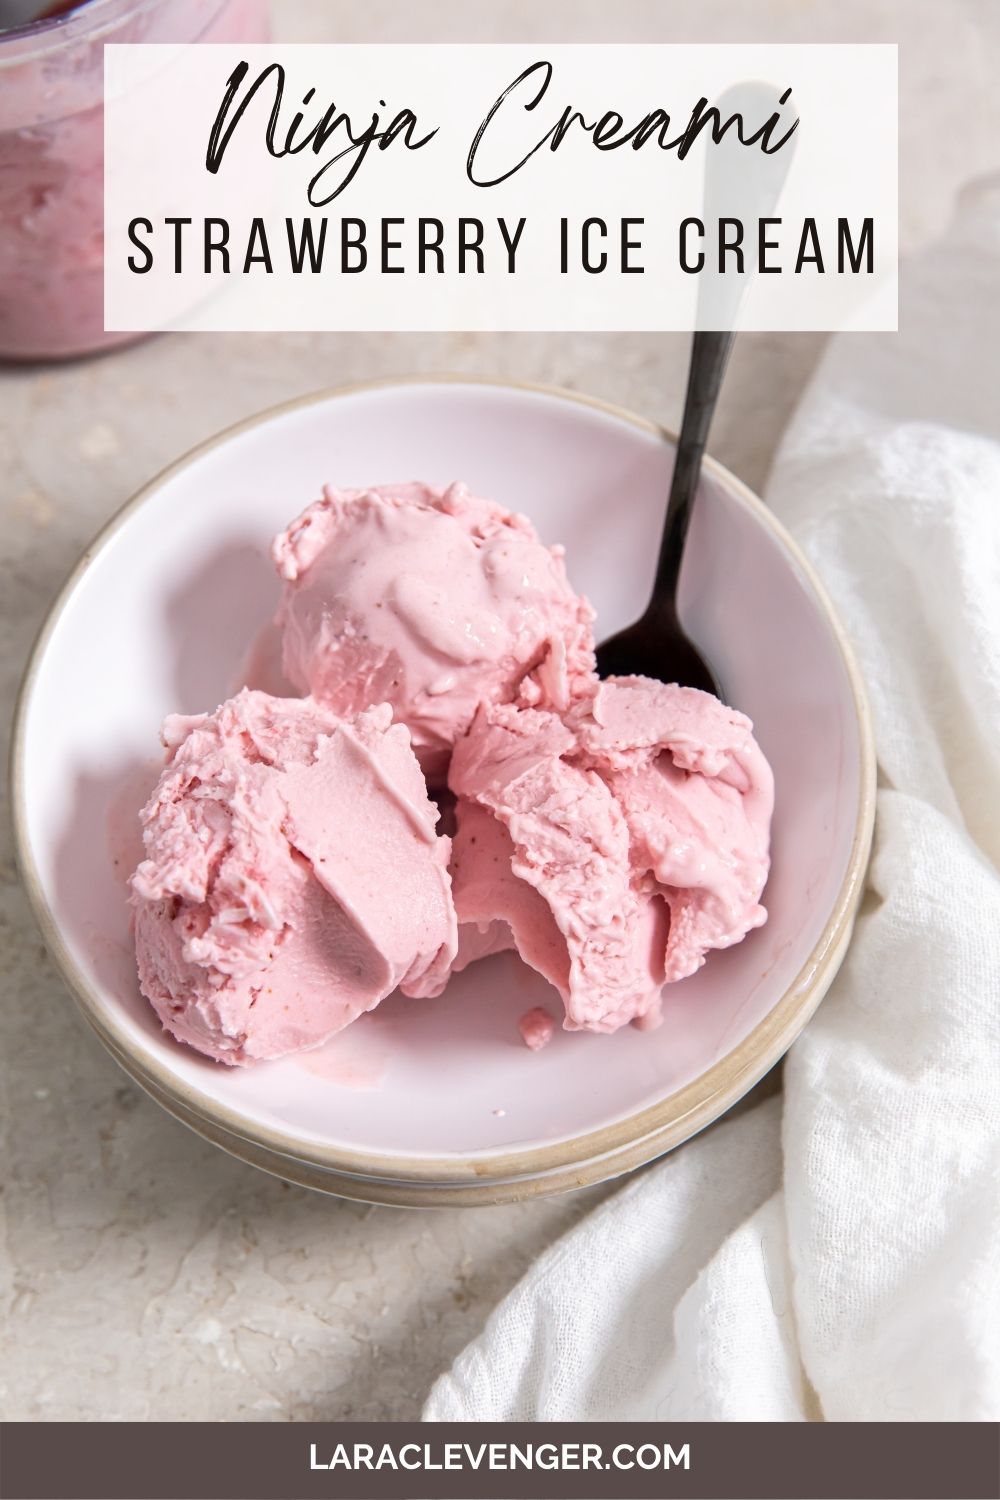 pinterest image for strawberry ice cream in the ninja creami